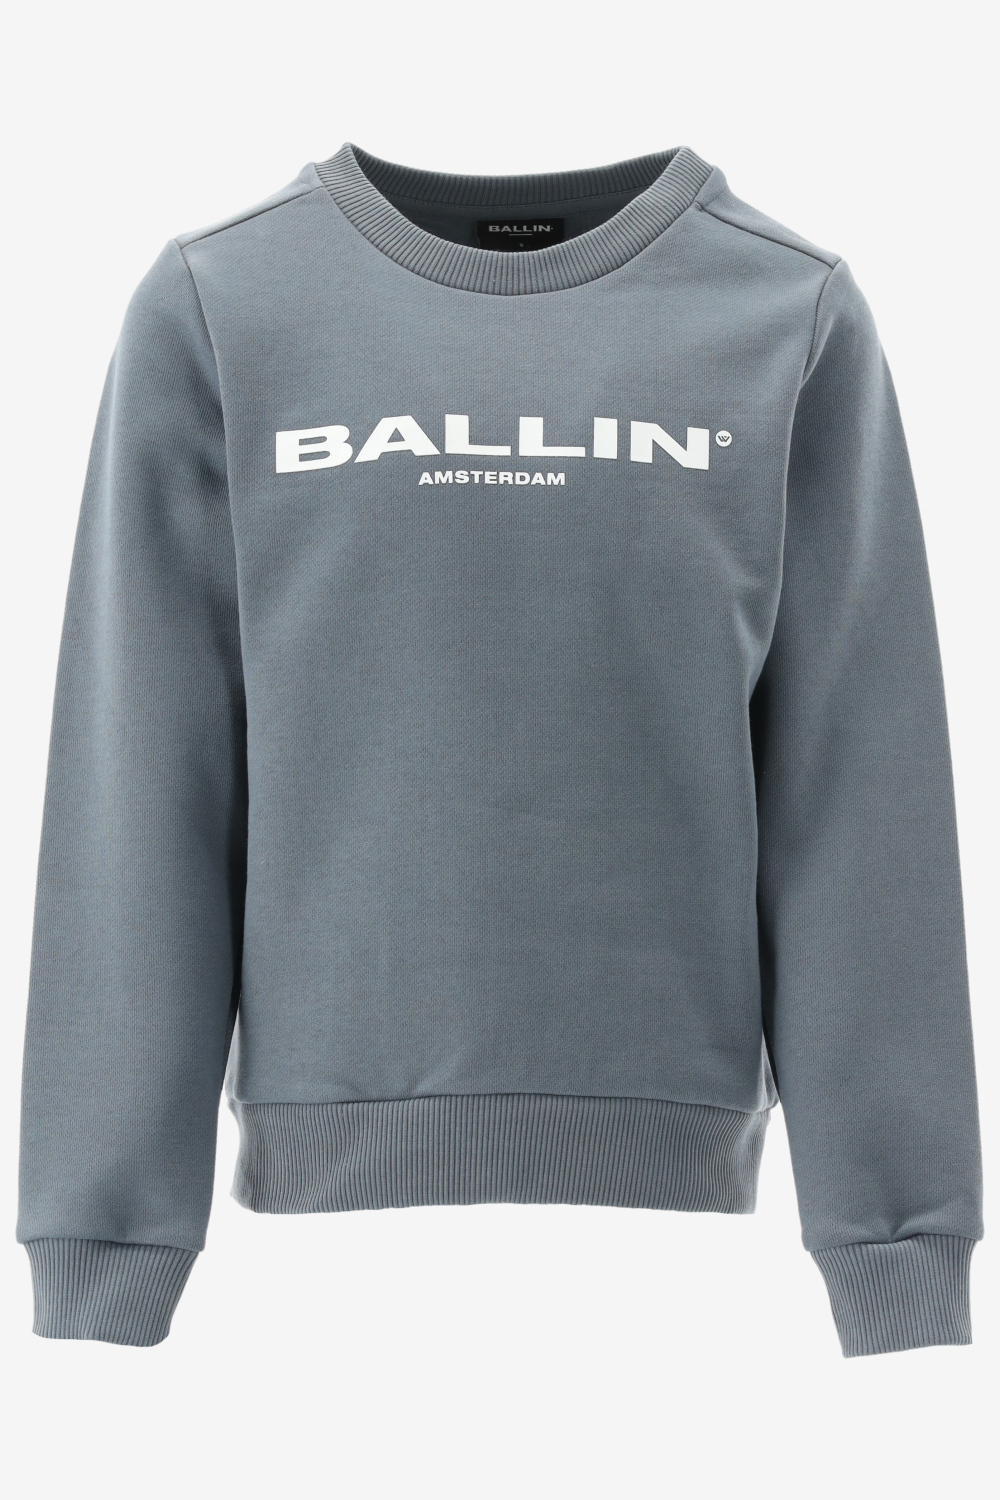 Ballin Amsterdam -  Jongens Slim Fit  Original Sweater  - Blauw - Maat 152